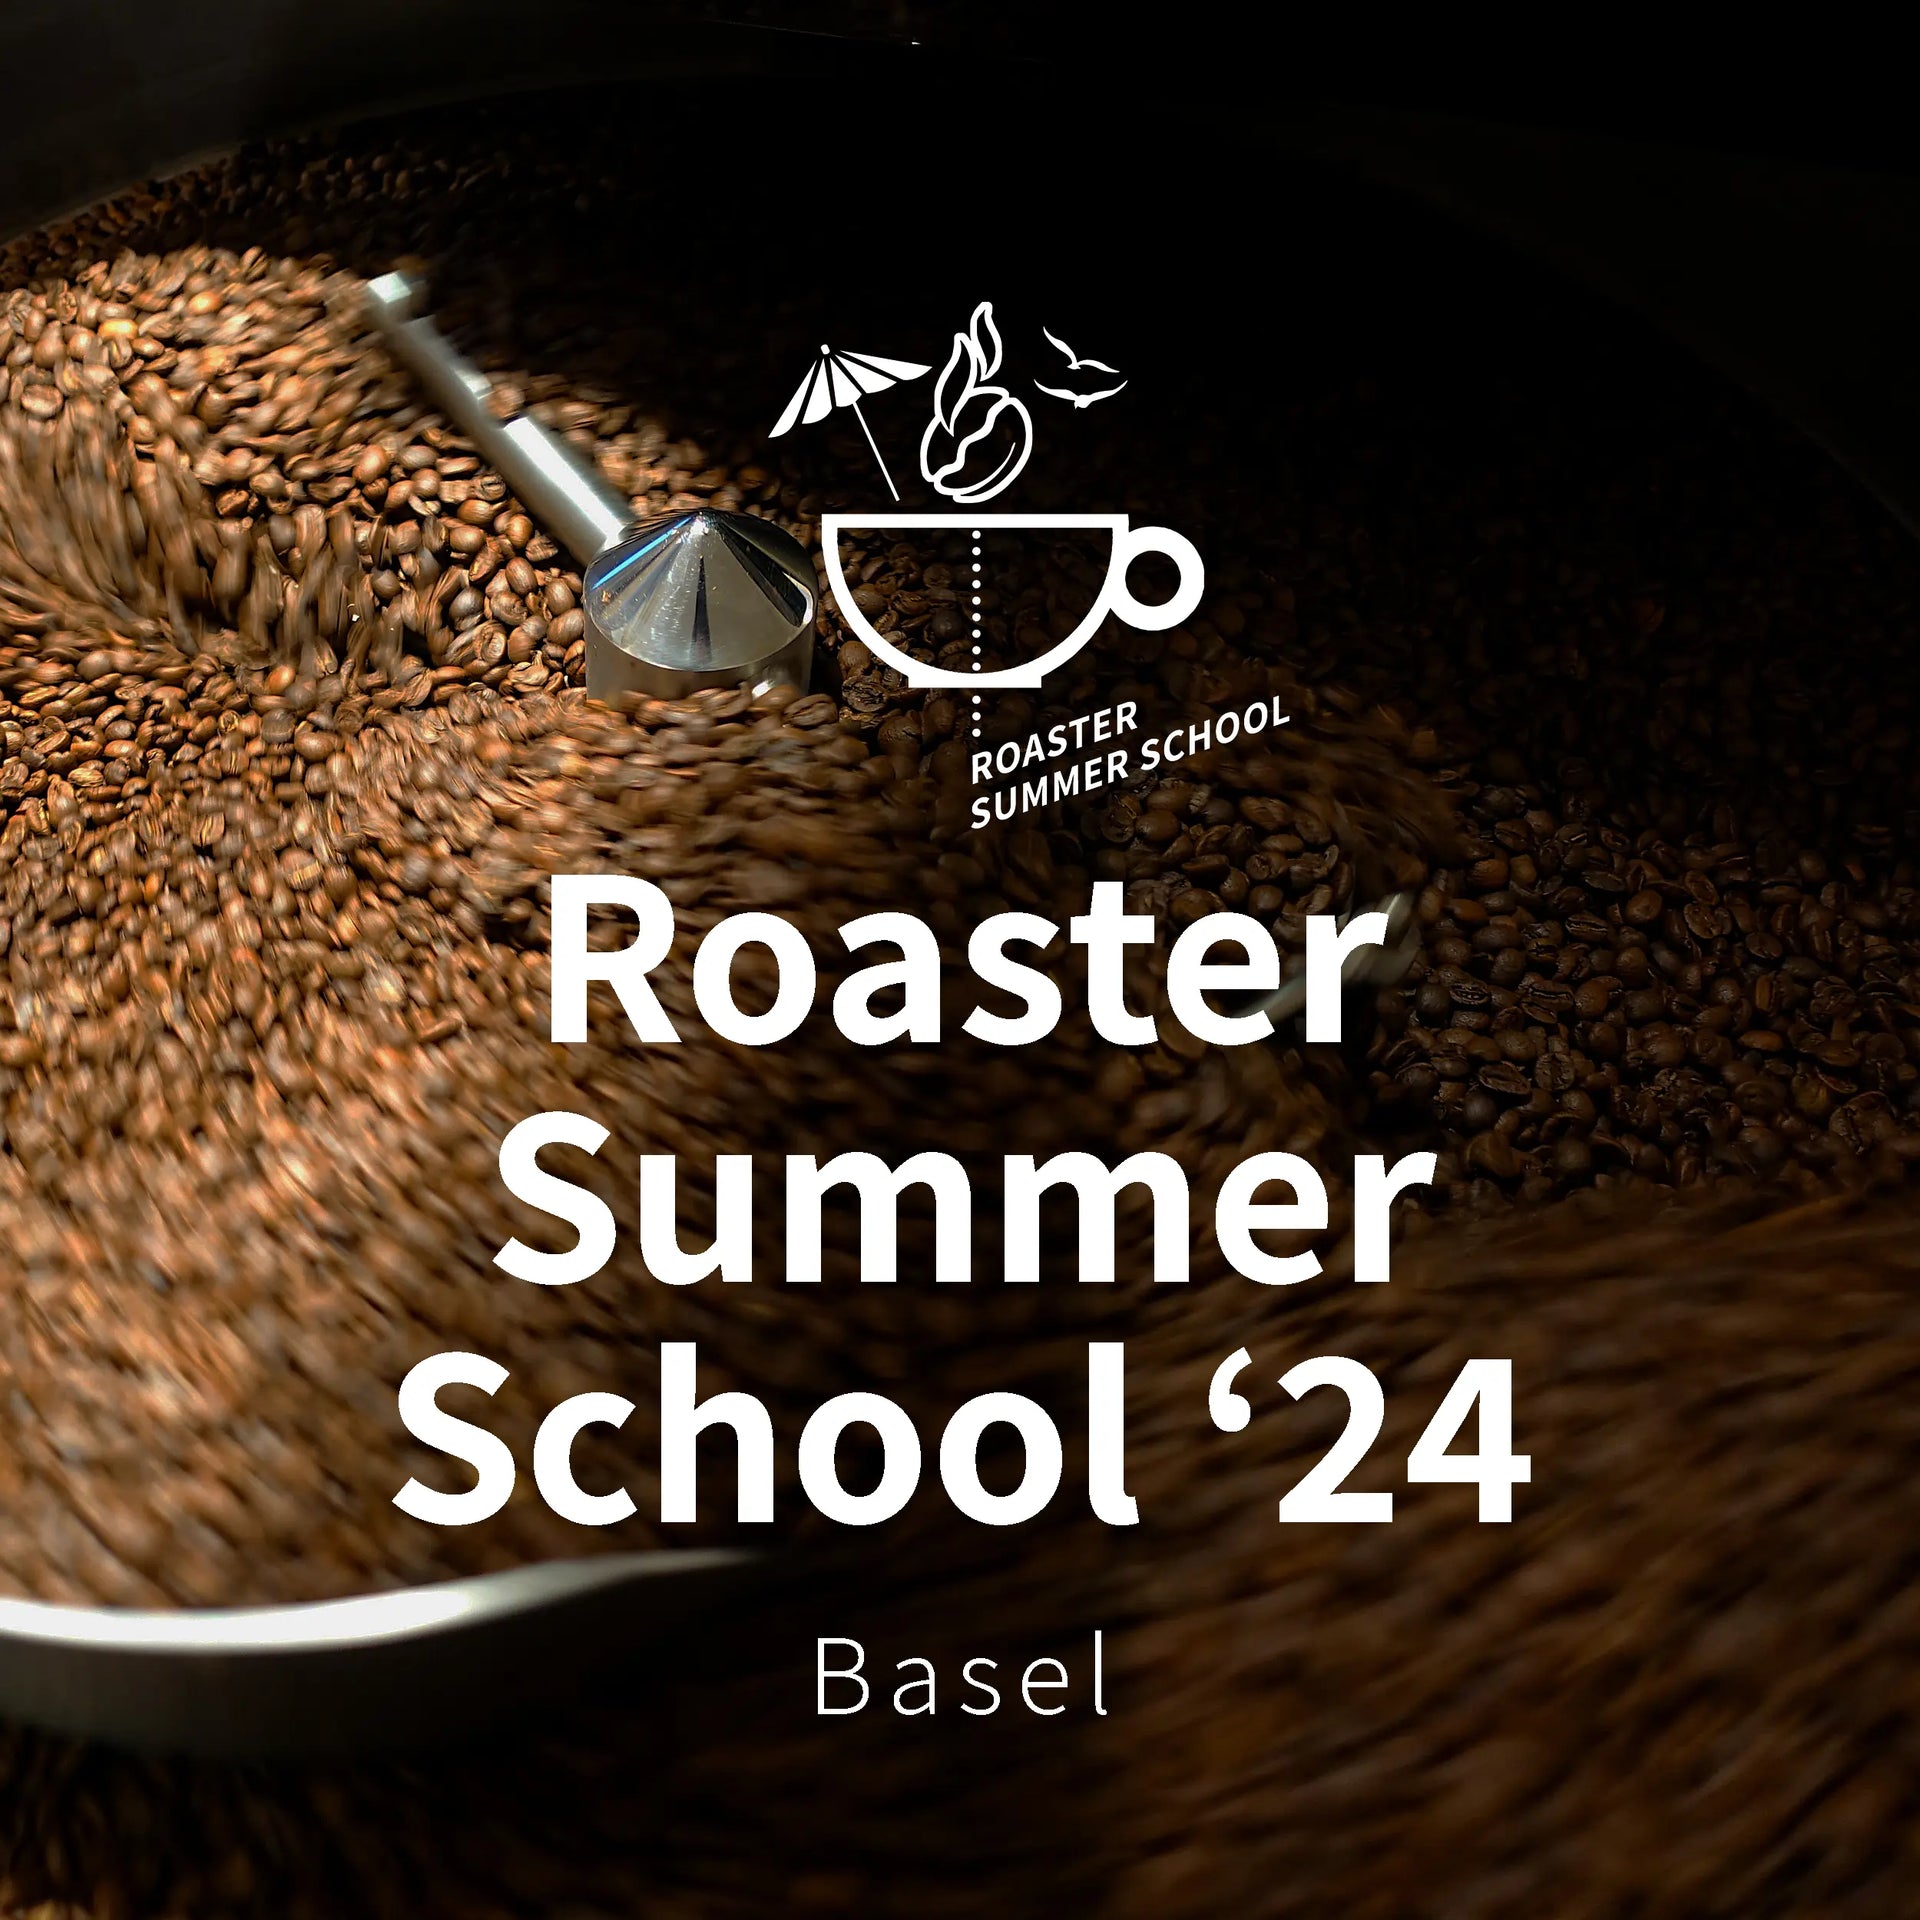 Roaster Summer School: Dienstag, 16. Juli